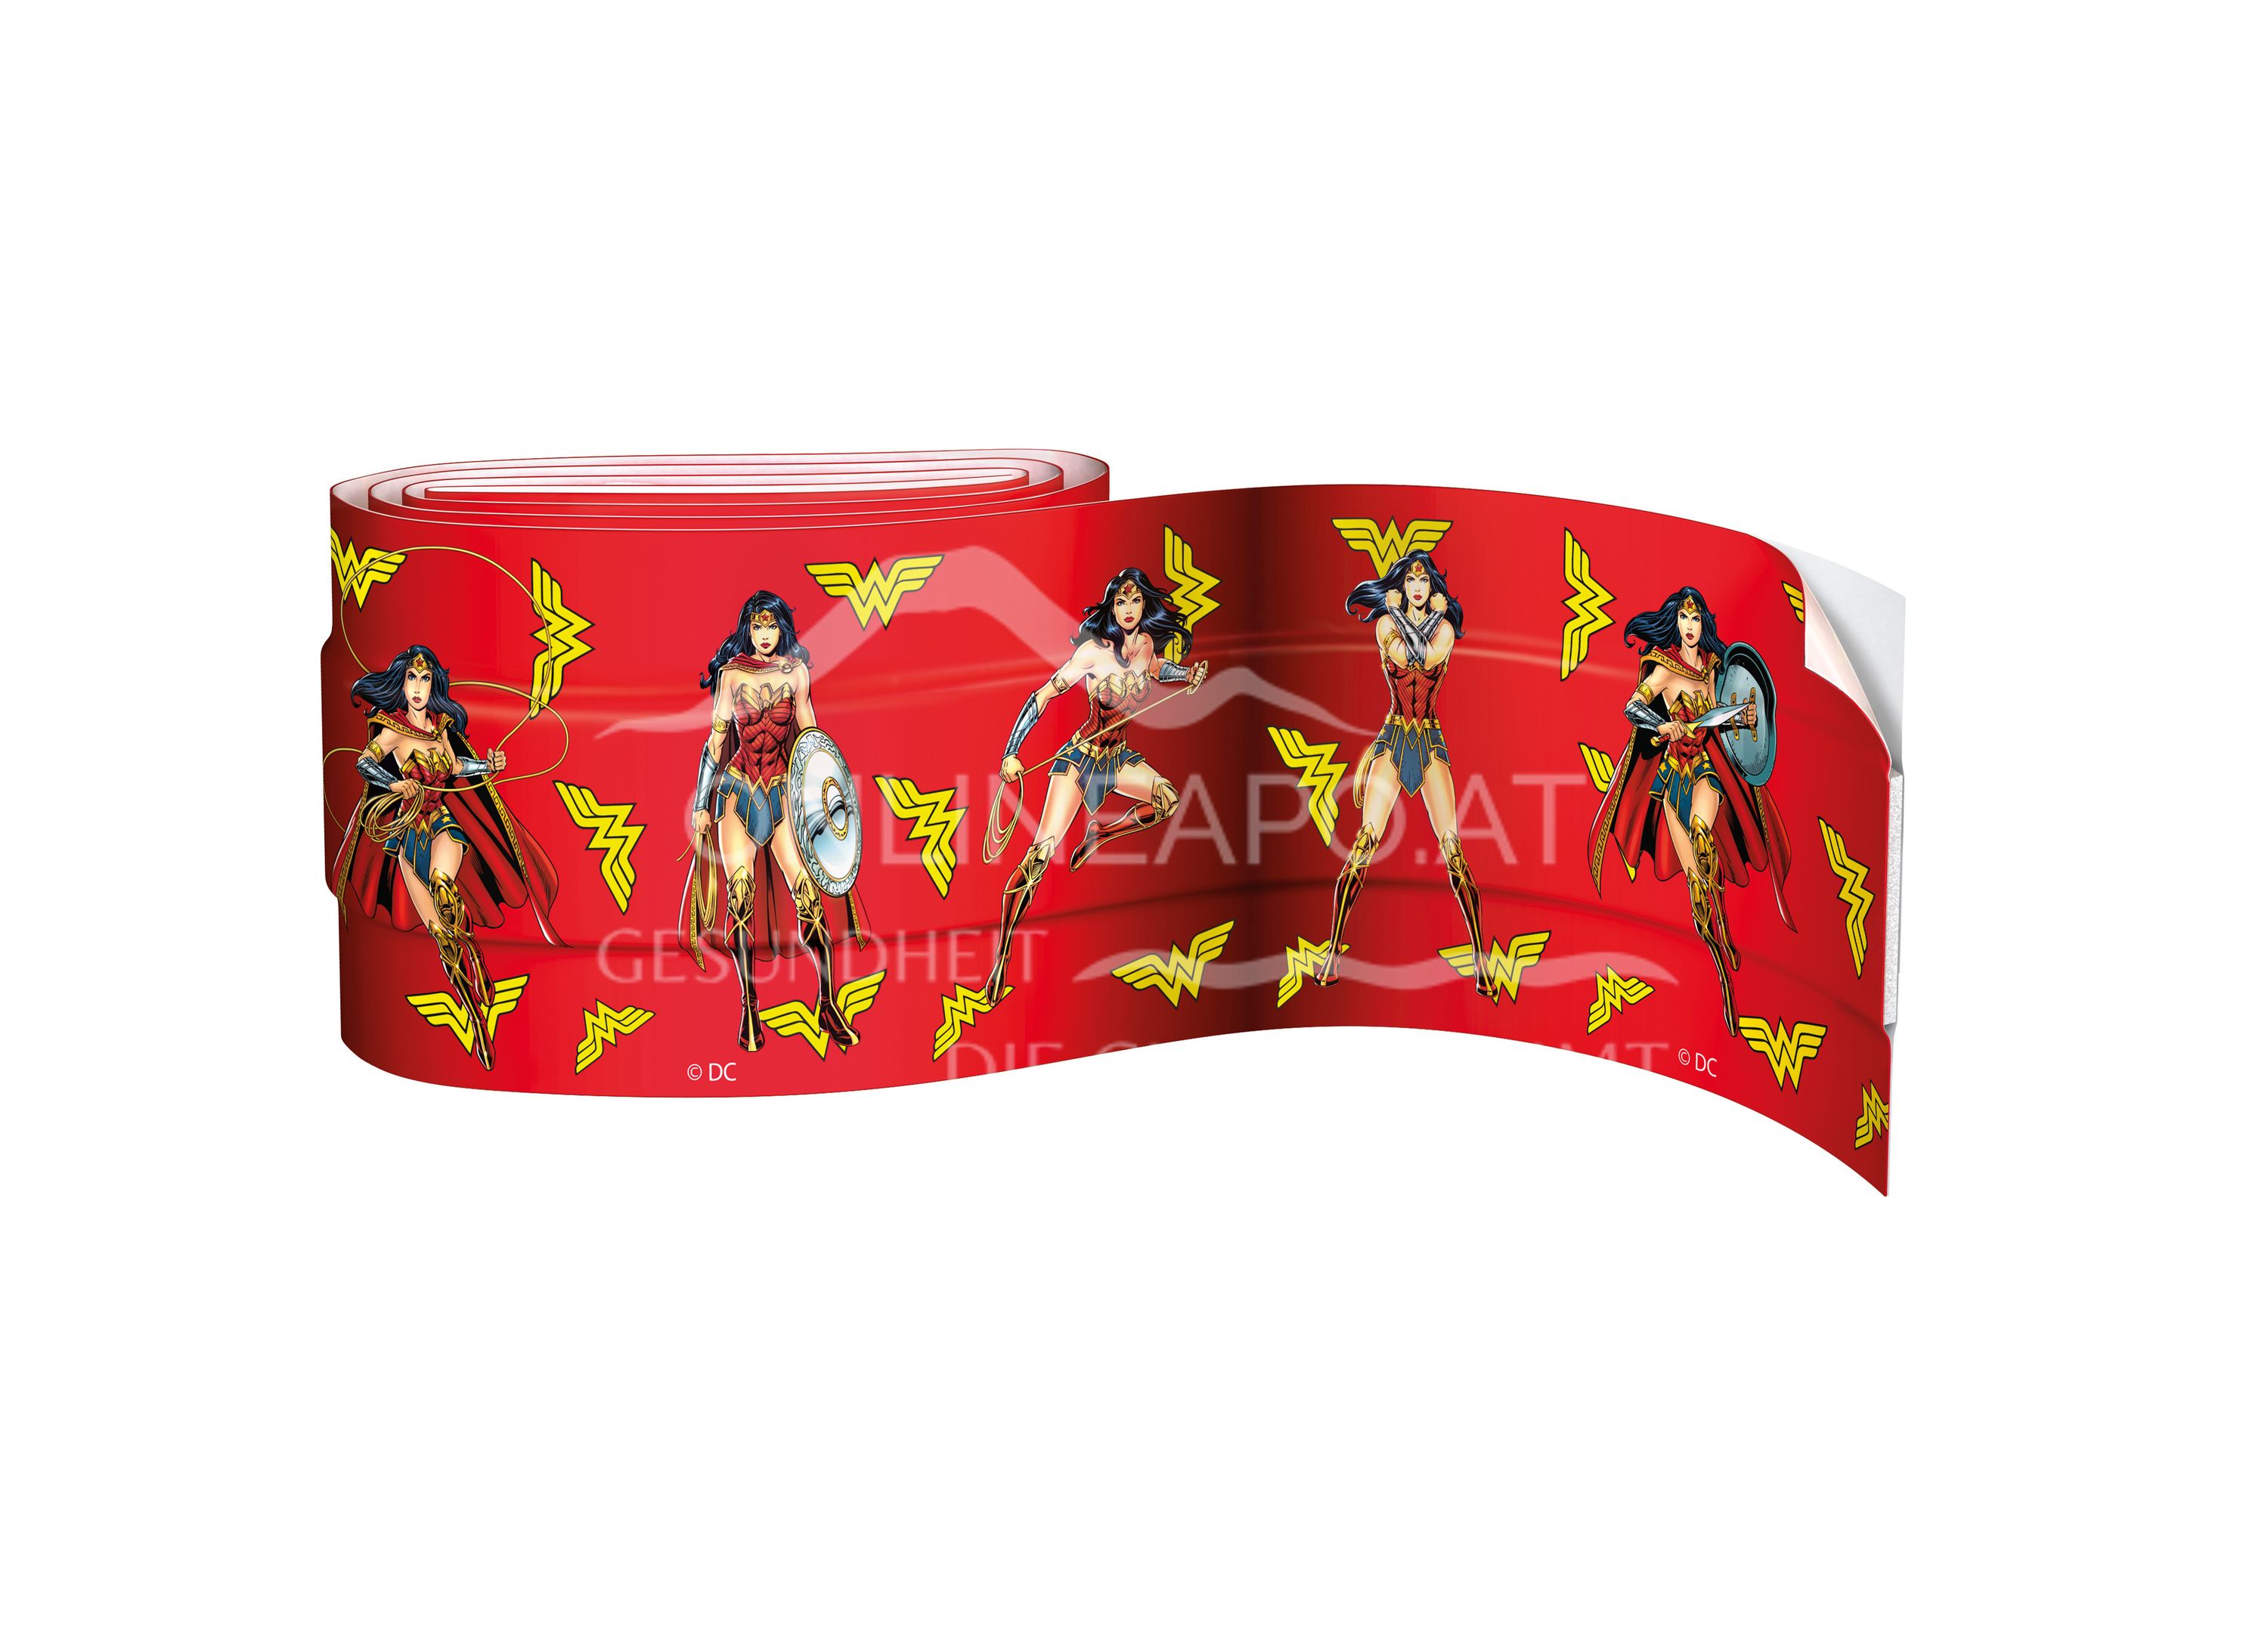 Leukoplast® Kids kids hero Edition Wonderwoman 6cm x 1m